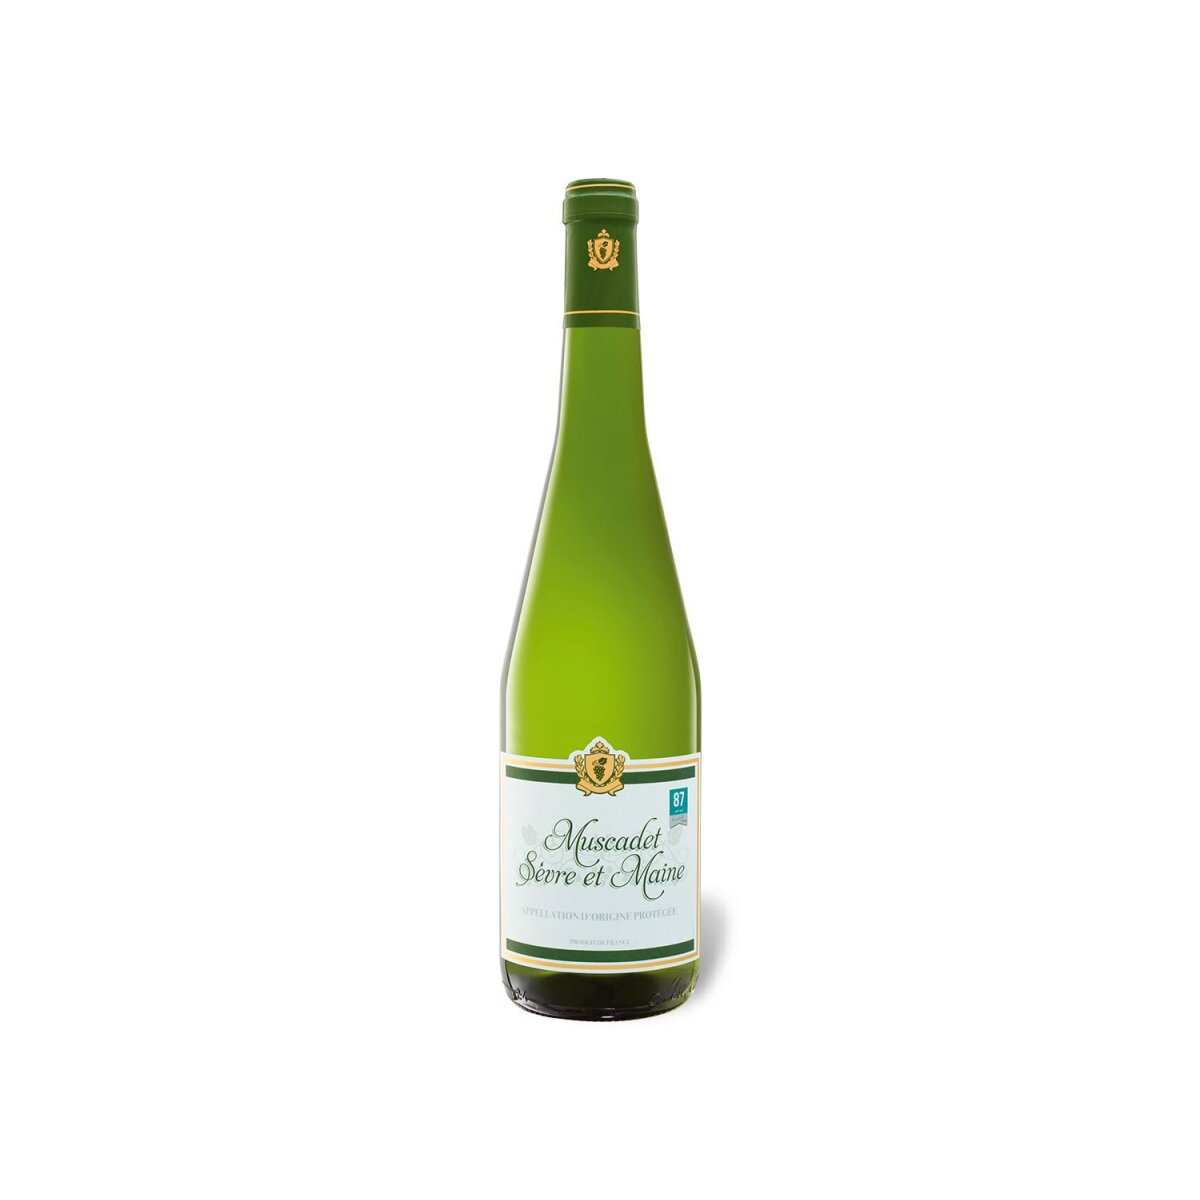 Muscadet Sévre et € B-Ware Maine 3,29 AOP neuwertig, trocken, Weißwein 2019 